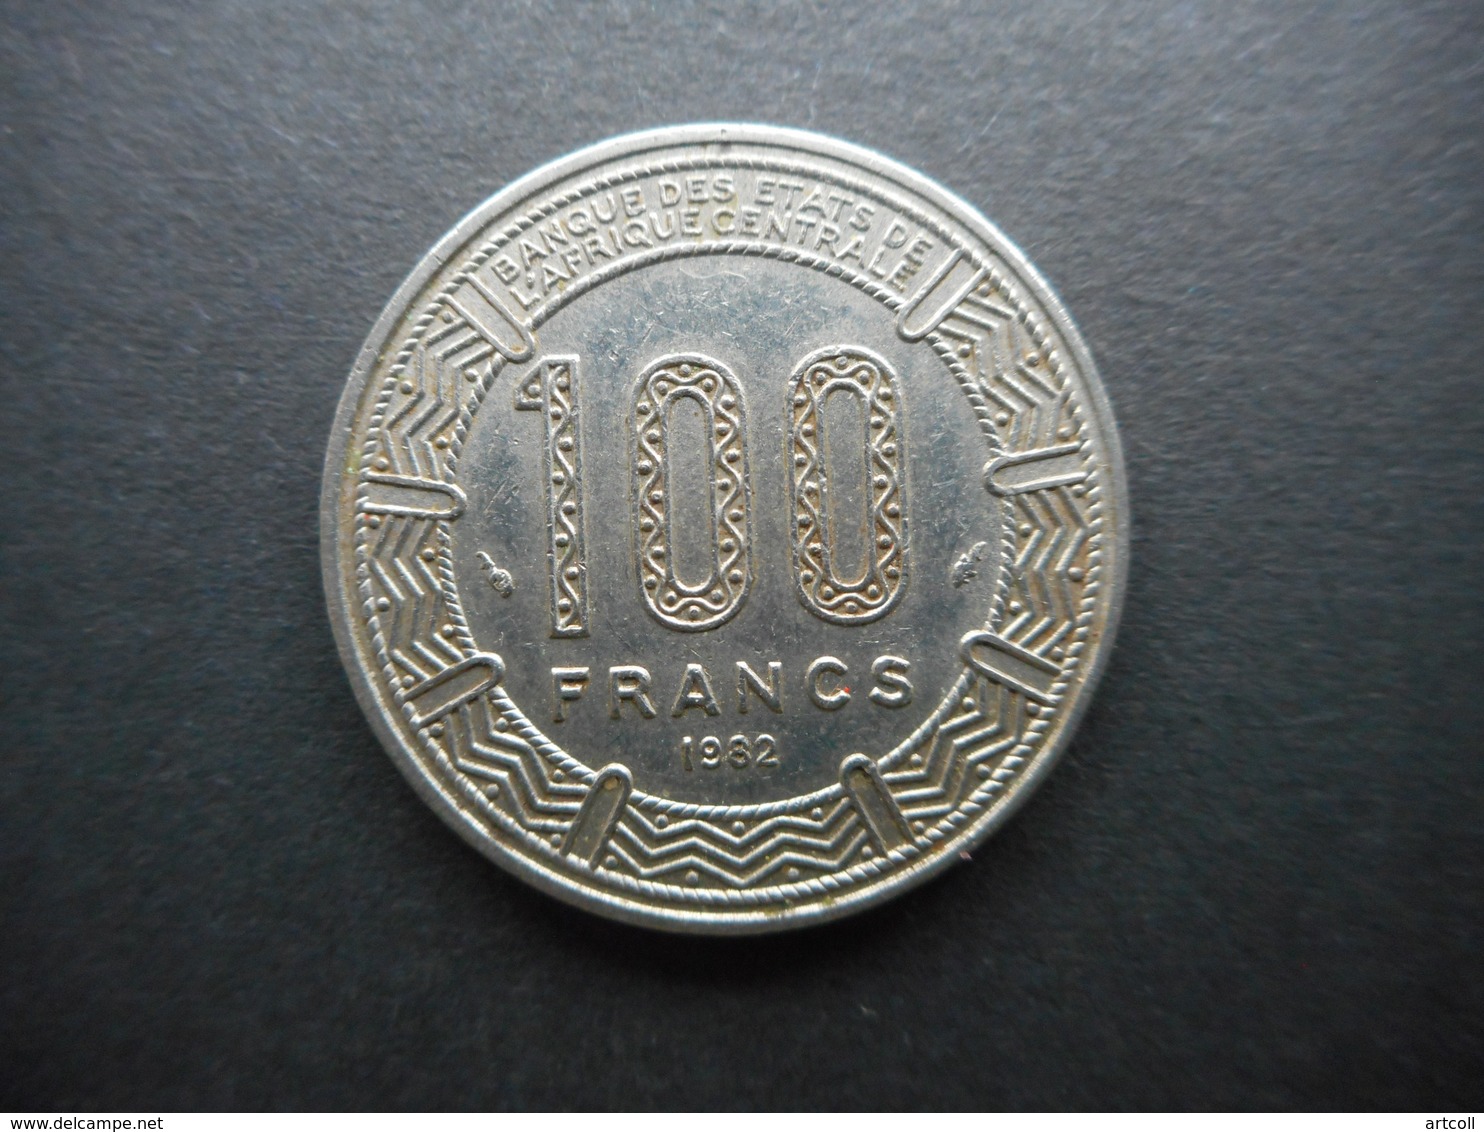 Gabon 100 Francs 1982 - Gabon